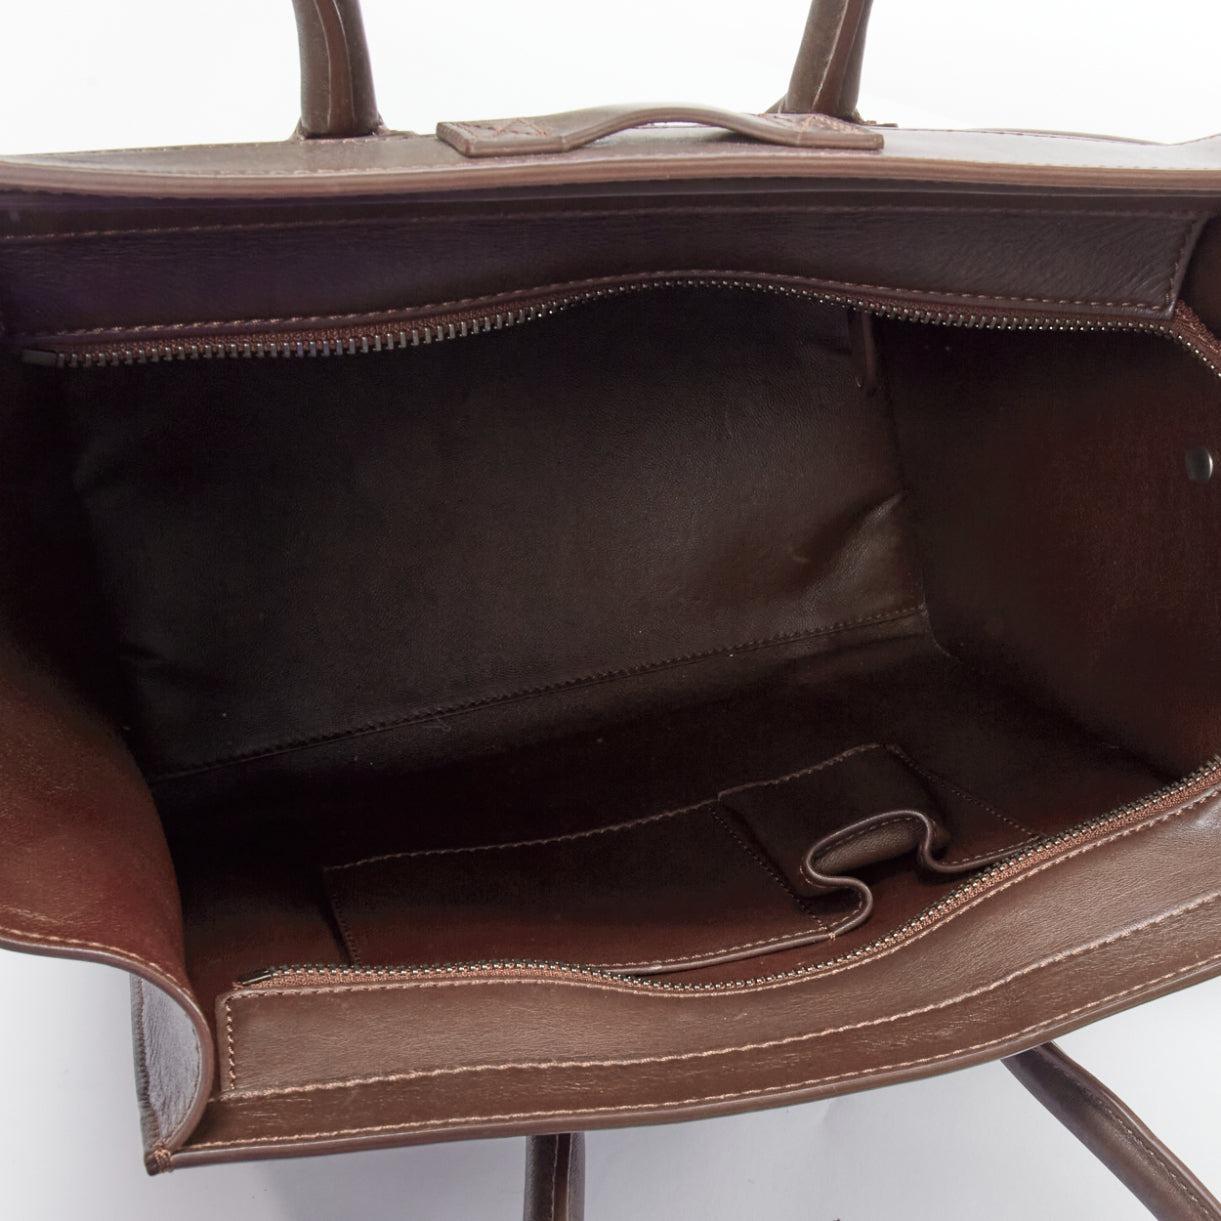 CELINE Luggage burgundy leather front zip logo shopper tote bag 6